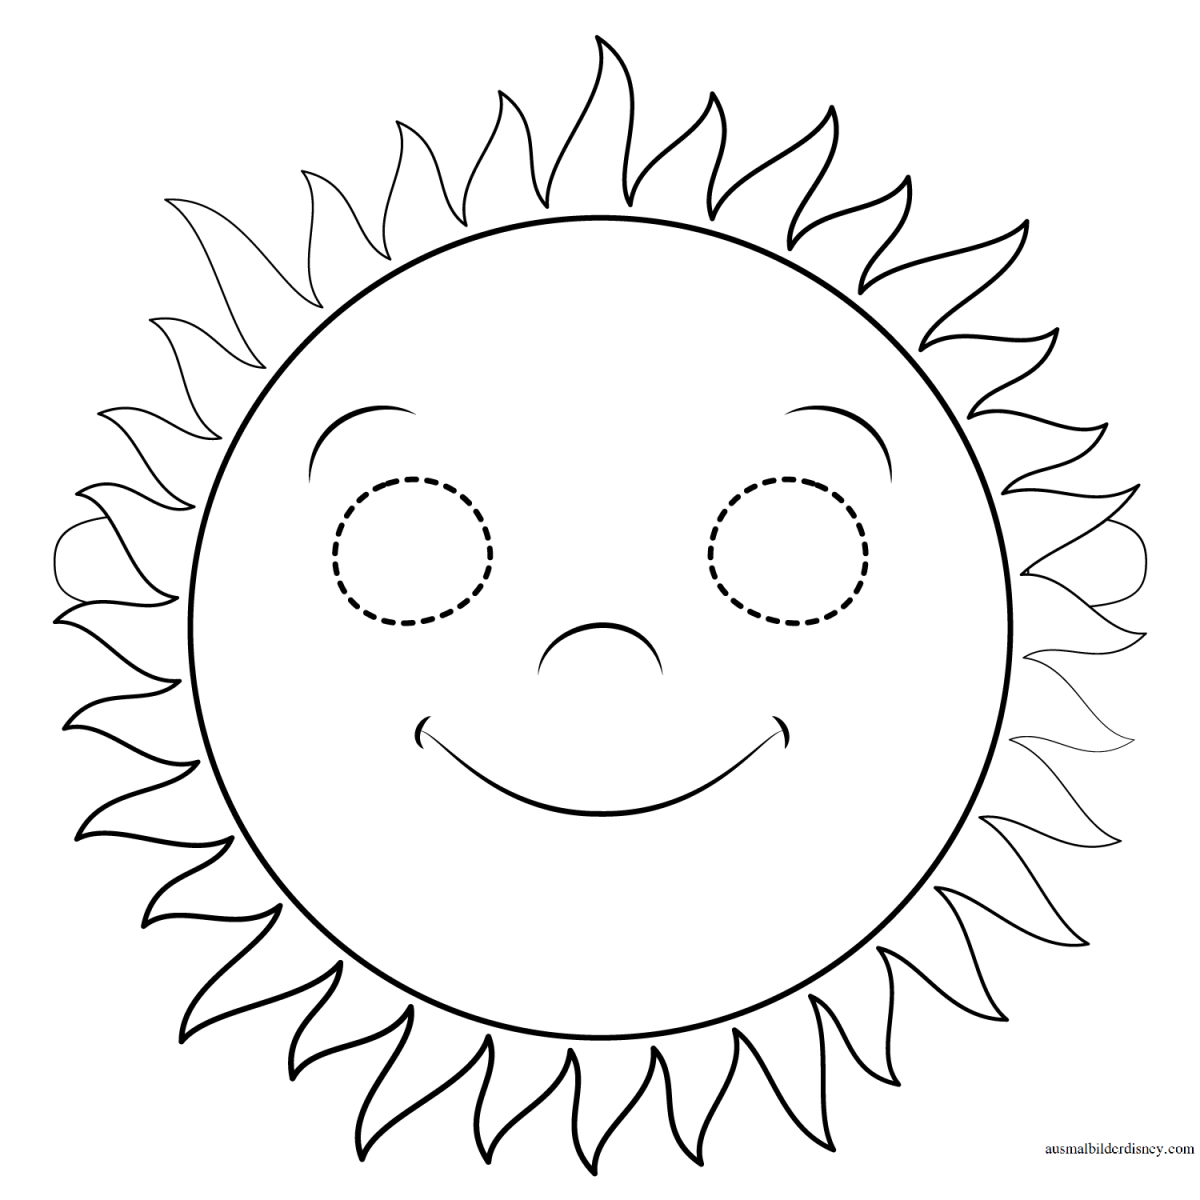 Раскраска. Солнышко. Солнце раскраска для детей. Раскраска солнце для детей 3-4 лет. Солнце трафарет для детей. Раскраски для детей 3 лет солнышко